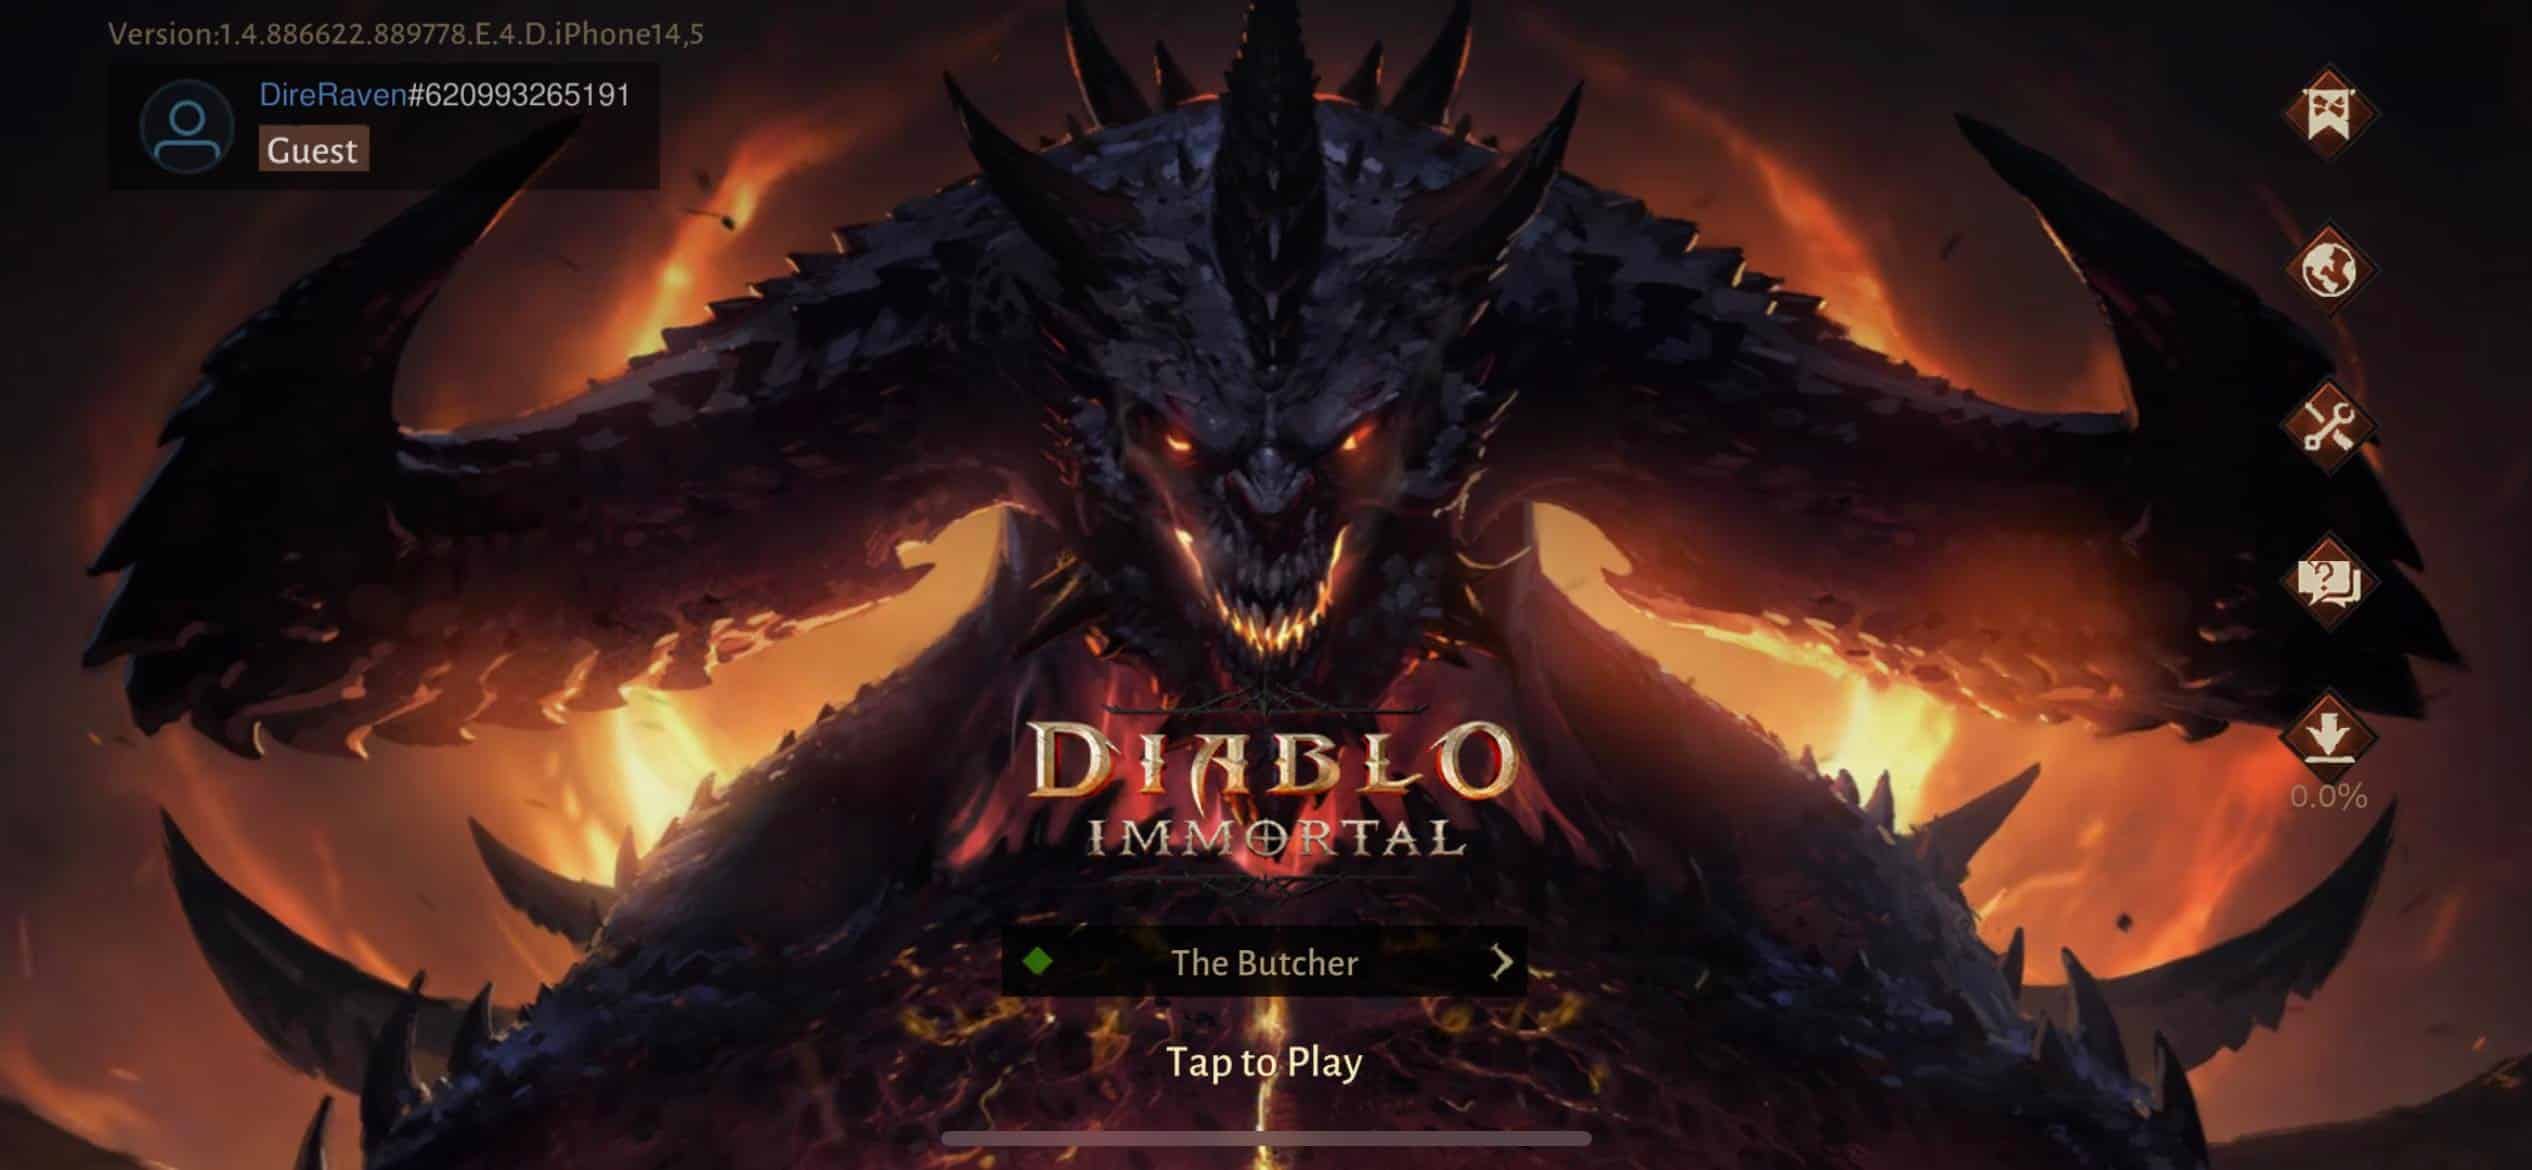 Diablo Immortal Class Guide  PlaySultan - News - PlaySultan: World's Game  and Digital Marketplace